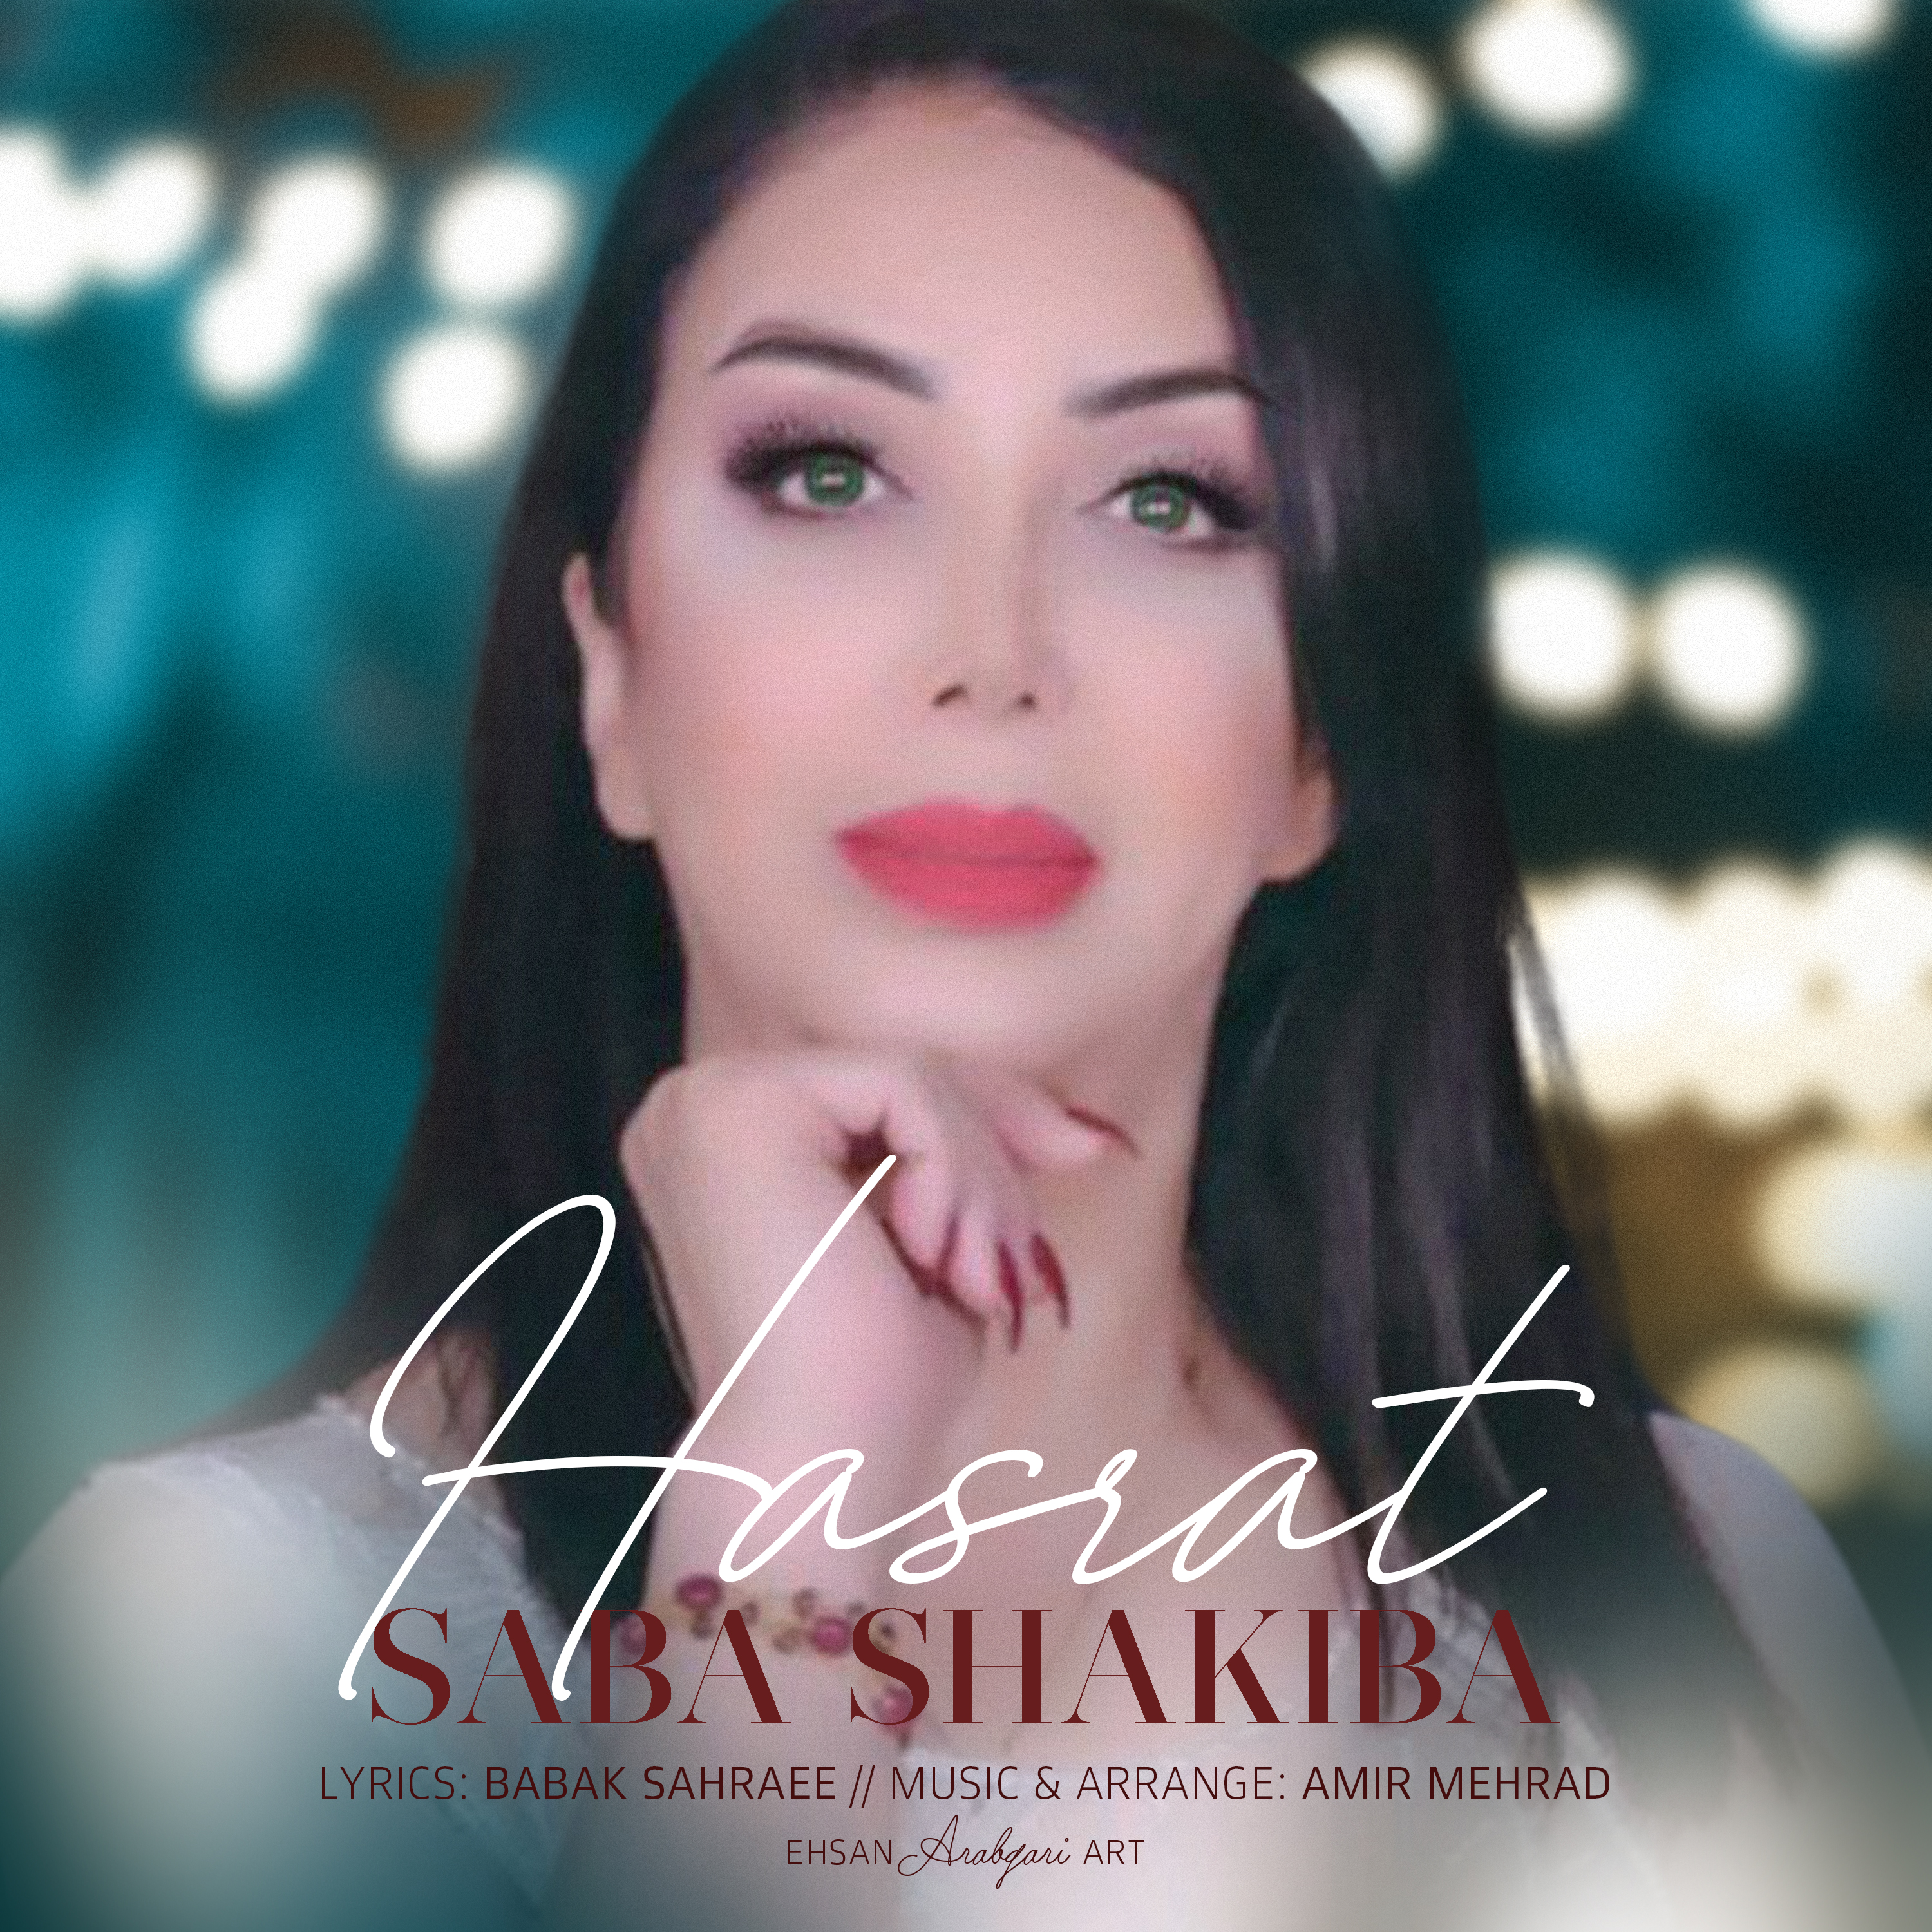 Saba Shakiba Hasrat(Video) 